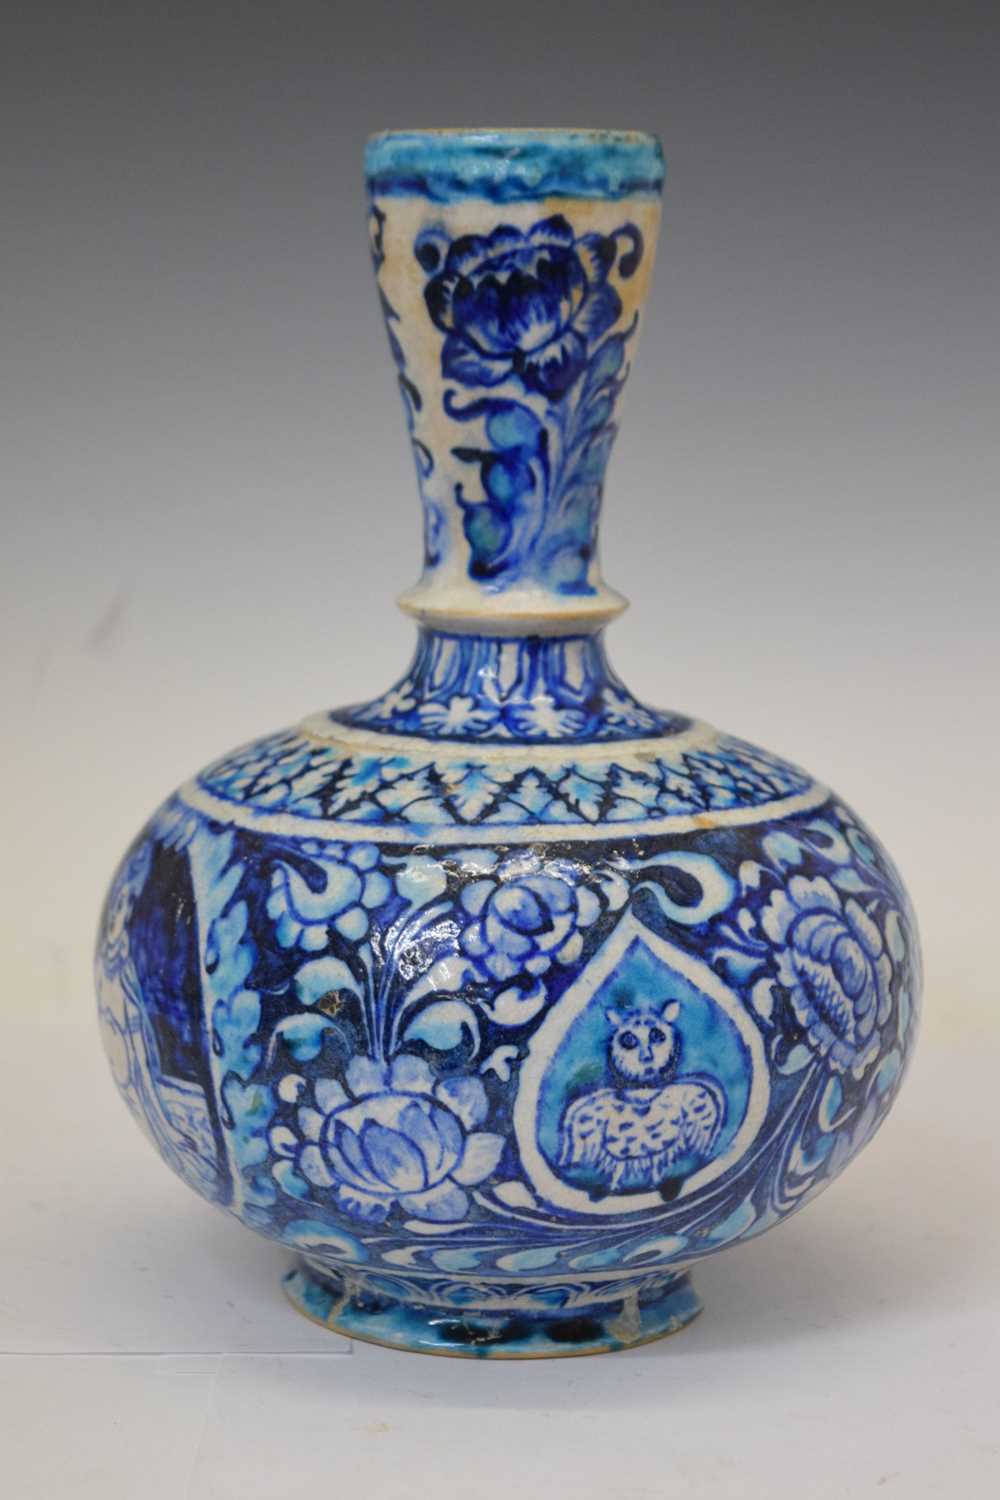 Pakistani blue and white vase, possibly Multan - Image 7 of 9